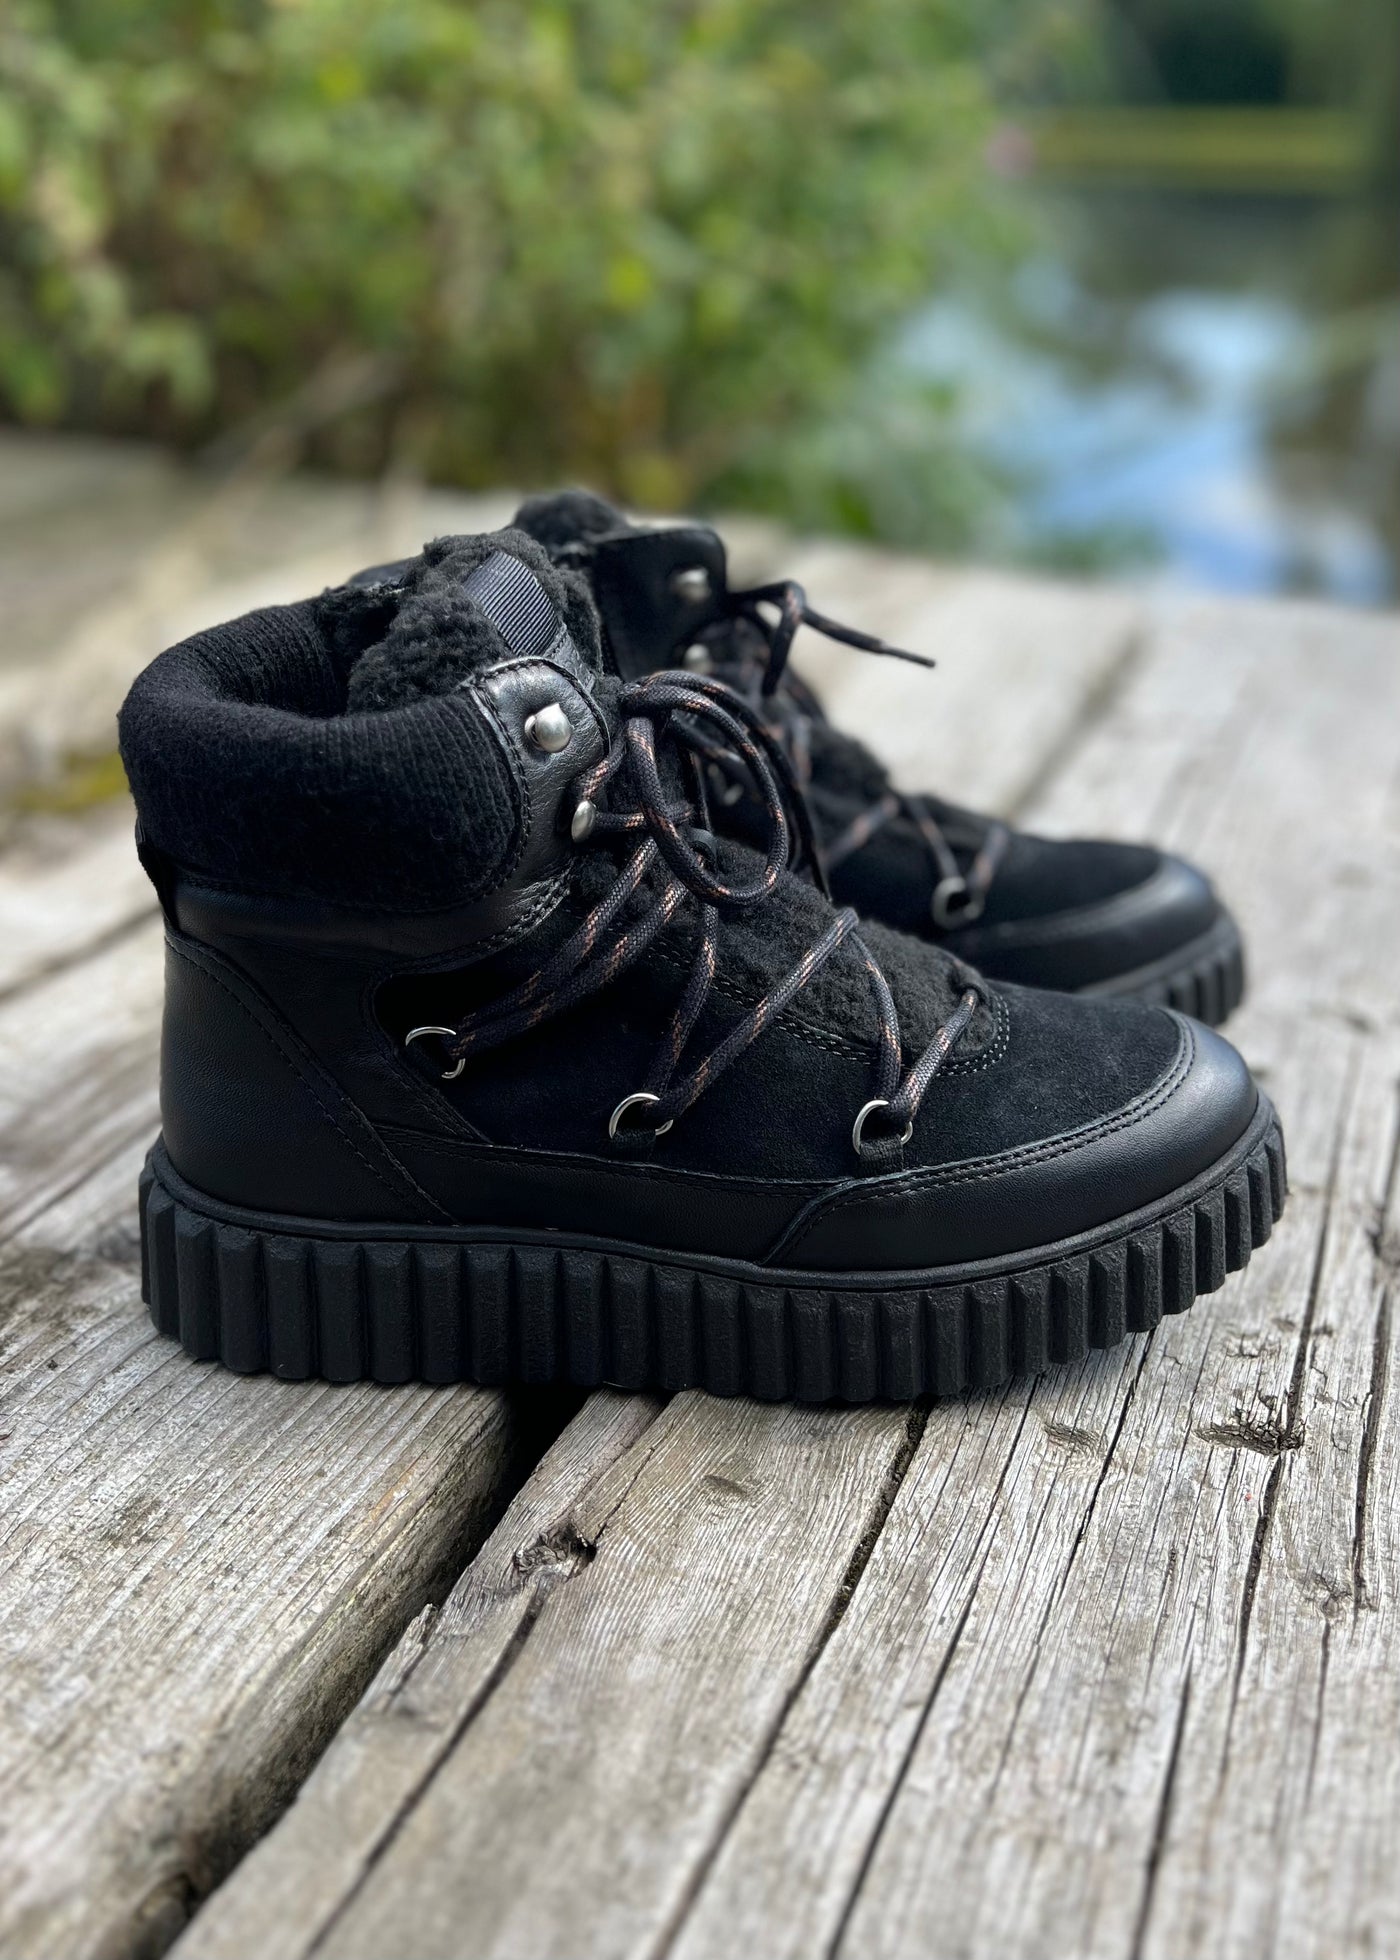 Black Leather & Fur Boots